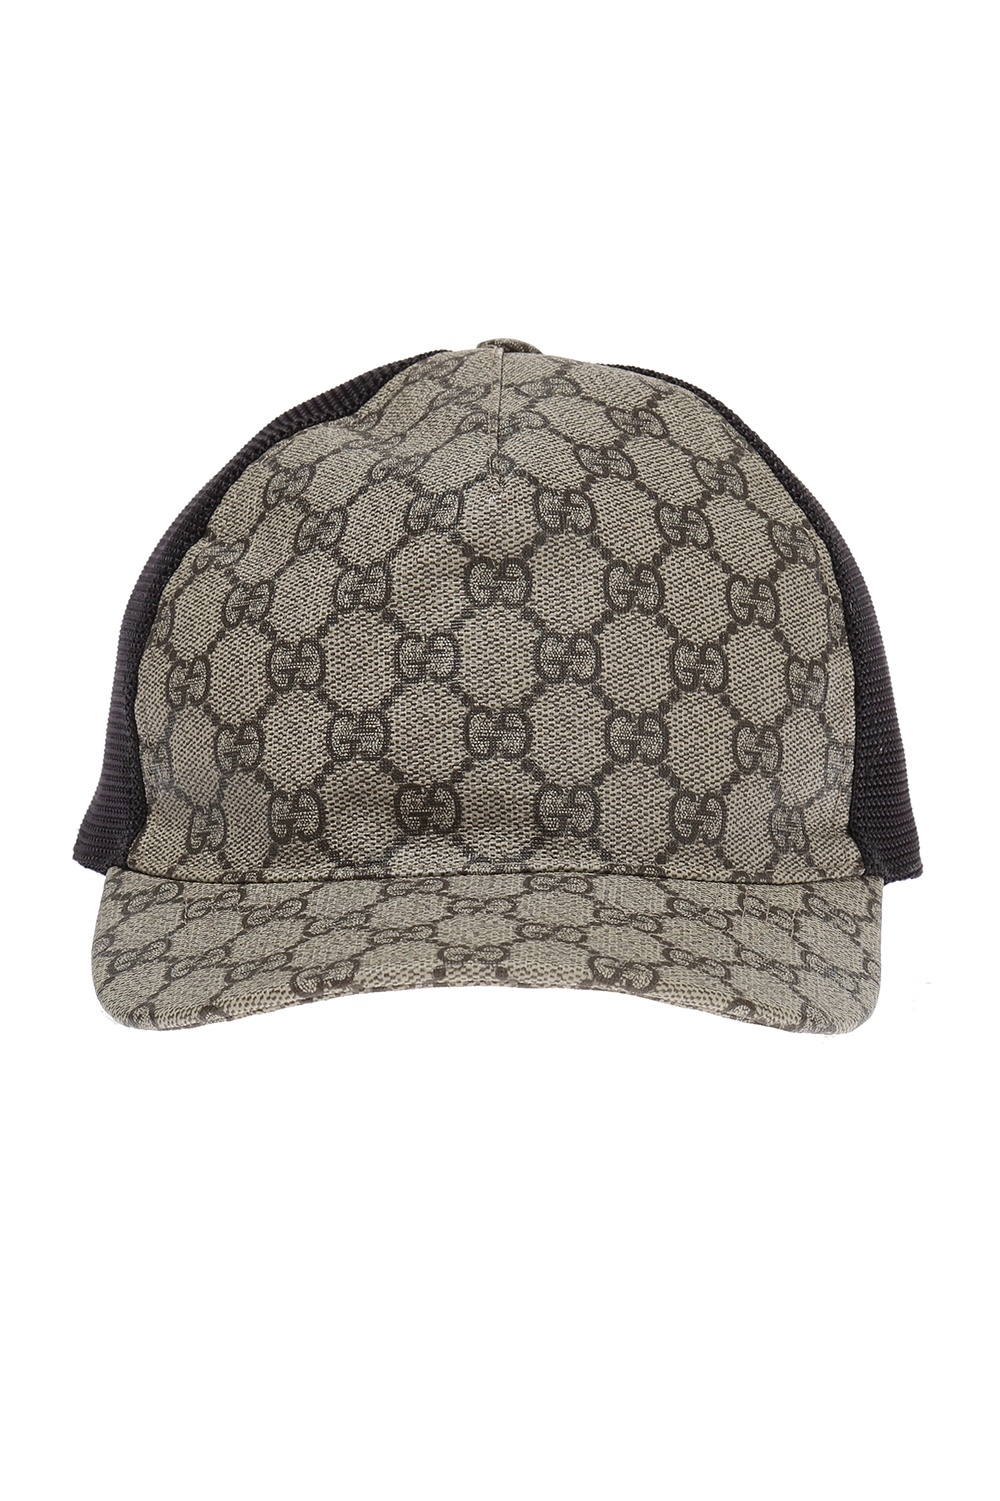 GG Supreme' canvas baseball cap Gucci 